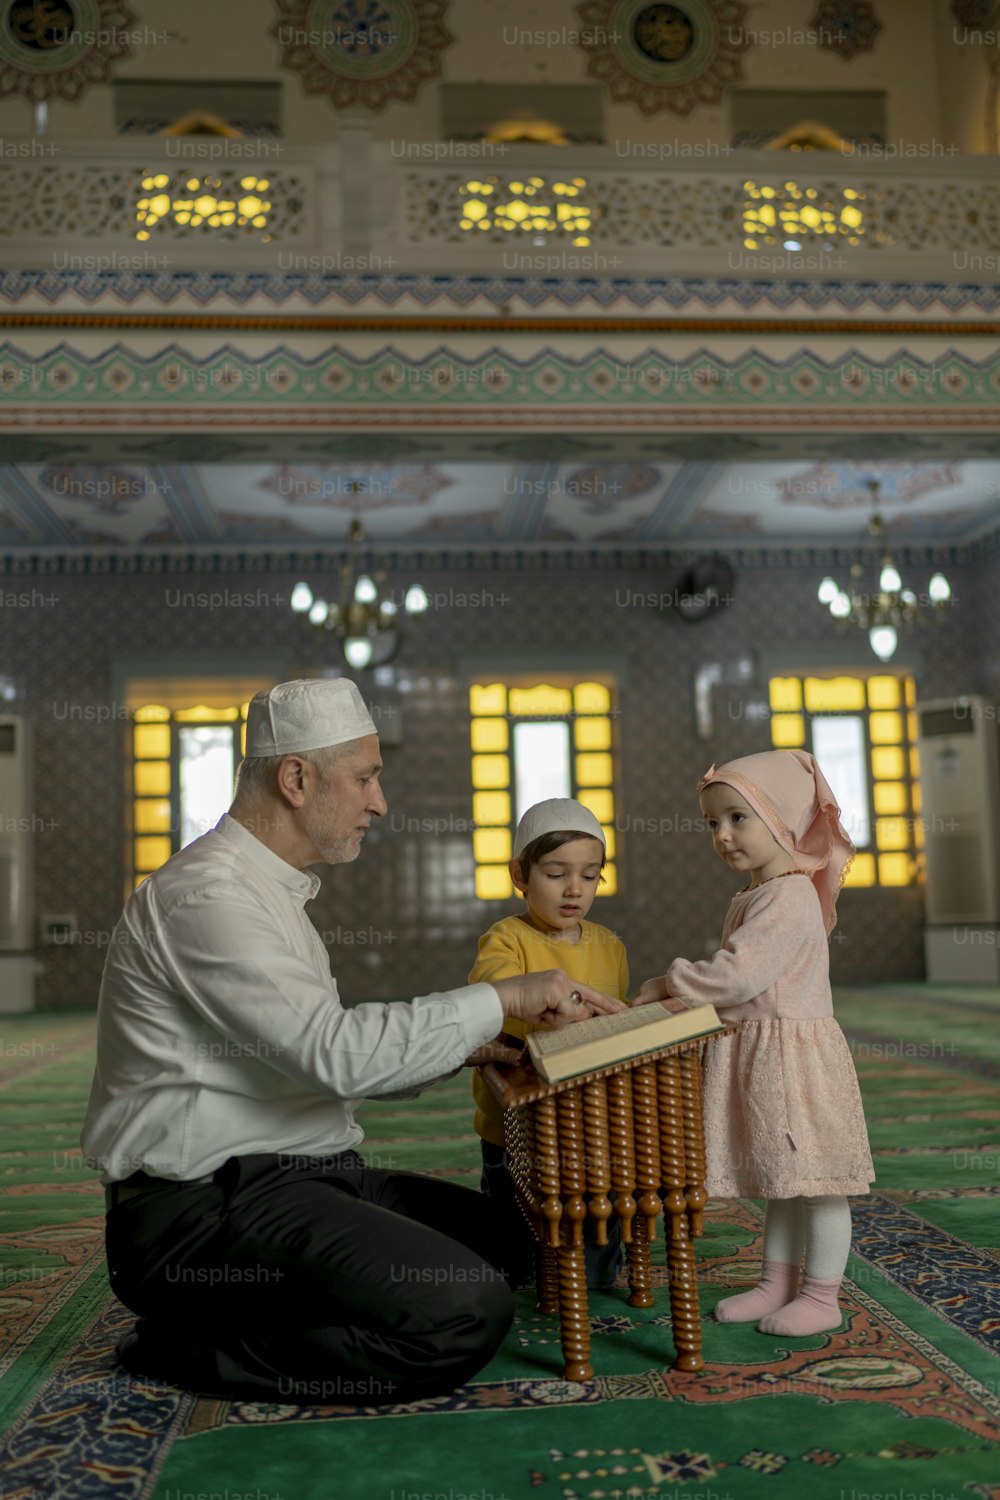 a man kneeling down next to a little girl